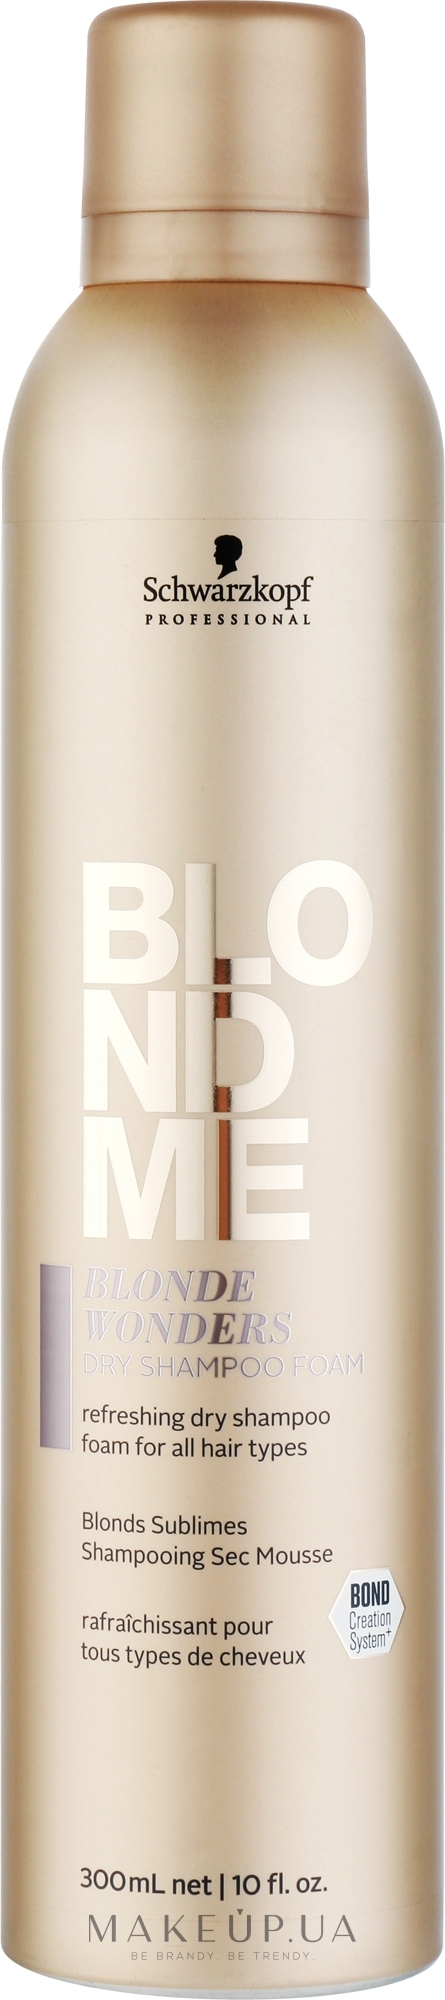 Сухой шампунь для волос - Schwarzkopf Professional Blondme Blonde Wonders Dry Shampoo Foam — фото 300ml